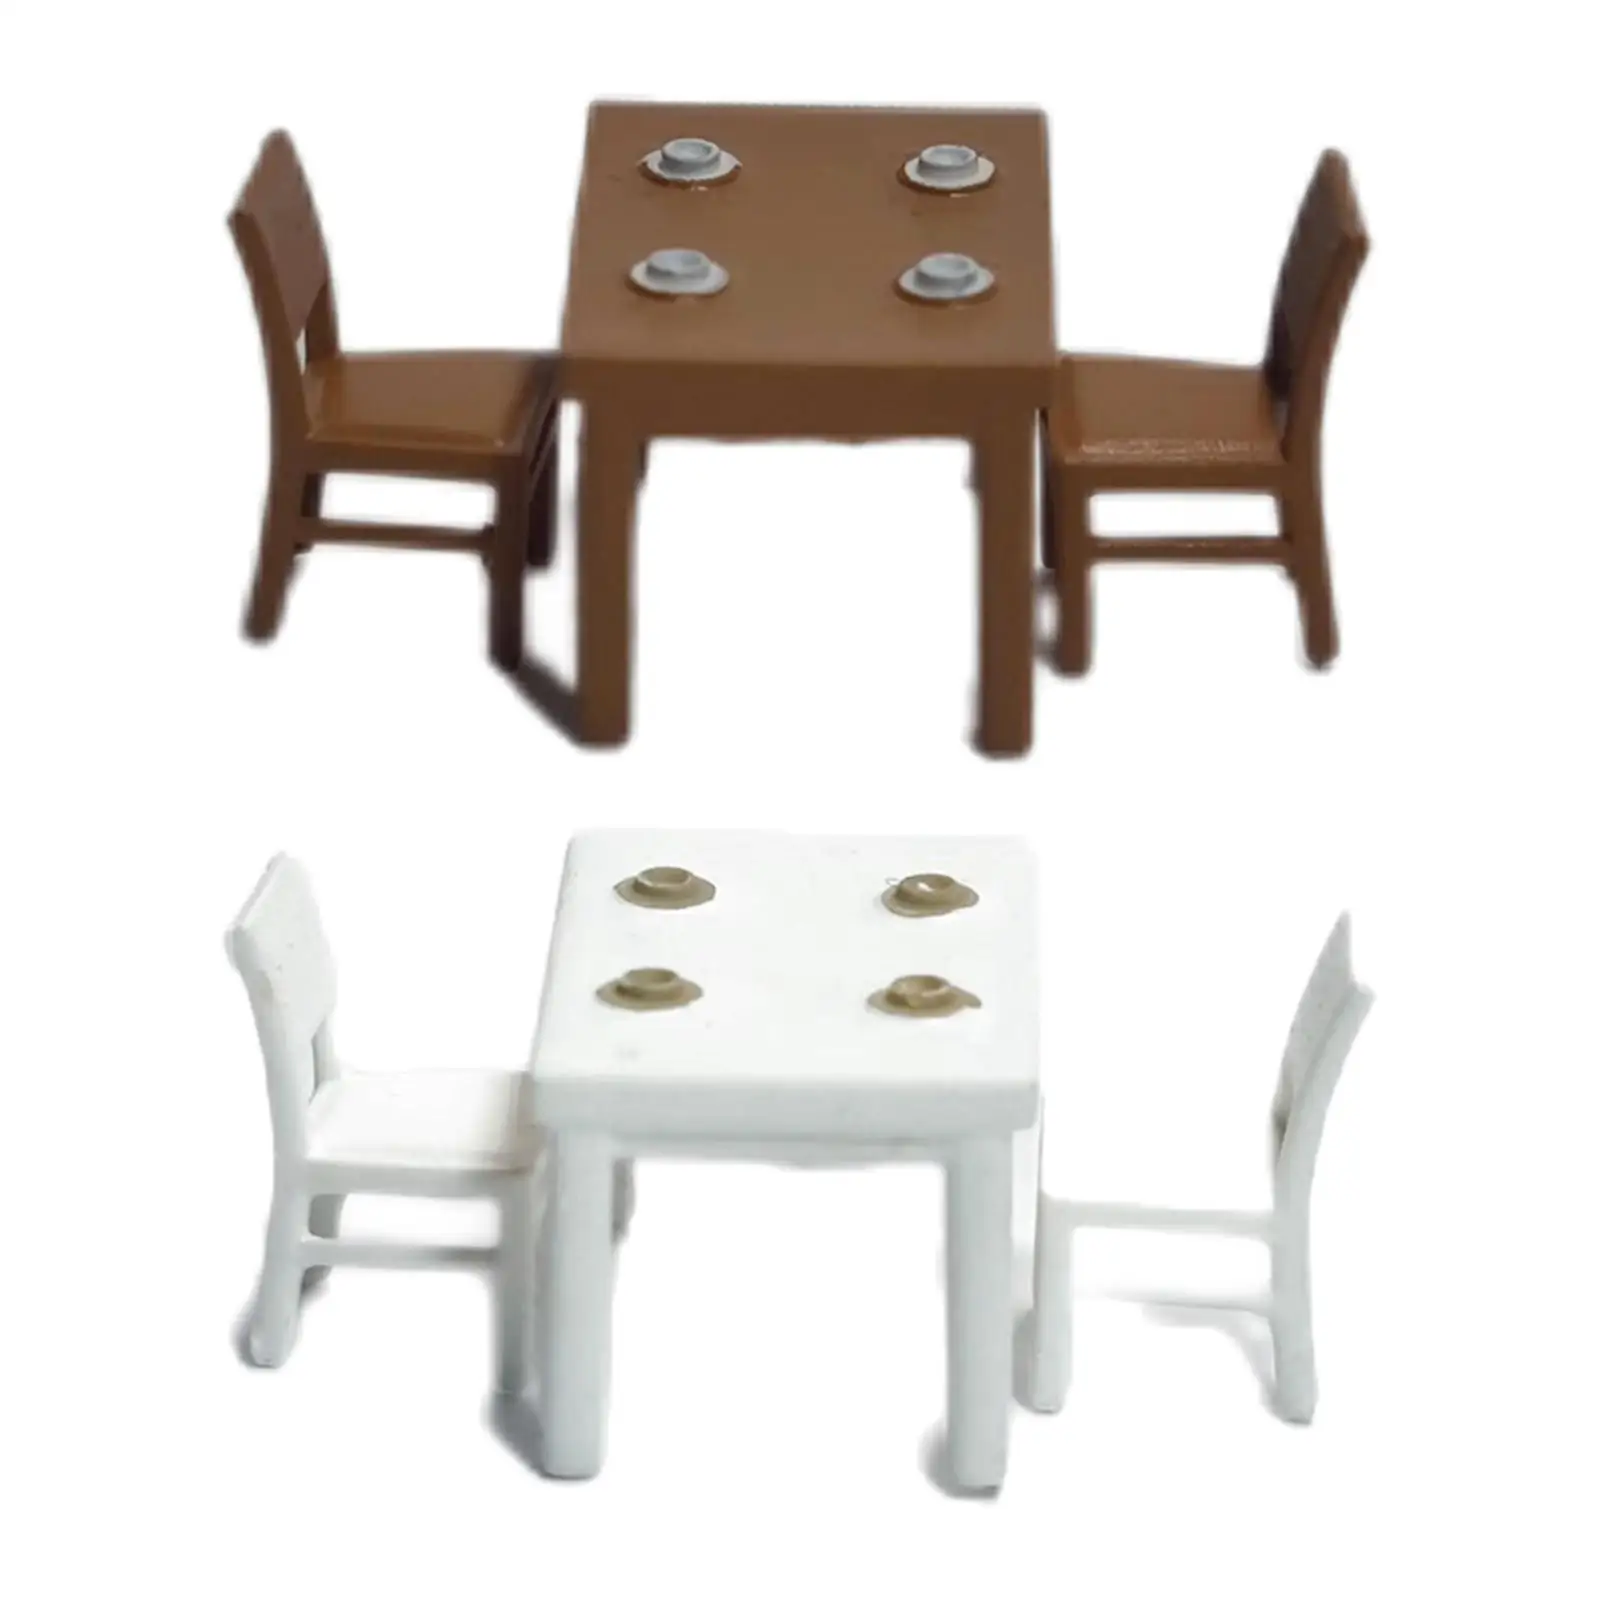 3Pcs 1:64 Scale Furniture Model Desktop Ornament Trains Architectural Resin Crafts Sand Table Layout Decoration Table Chair Set